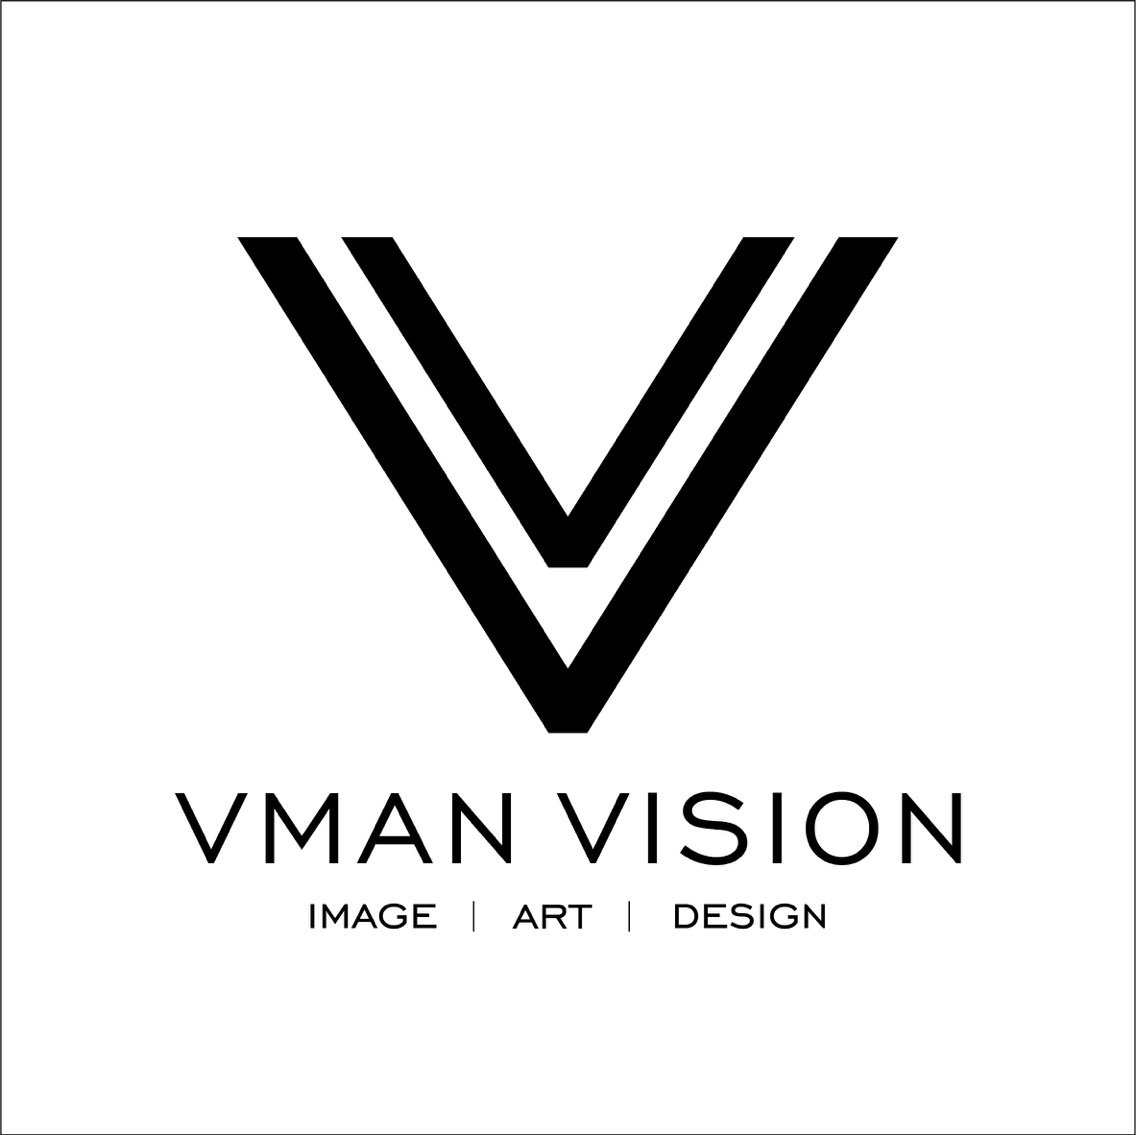 VMAN VISION 微慢視覺